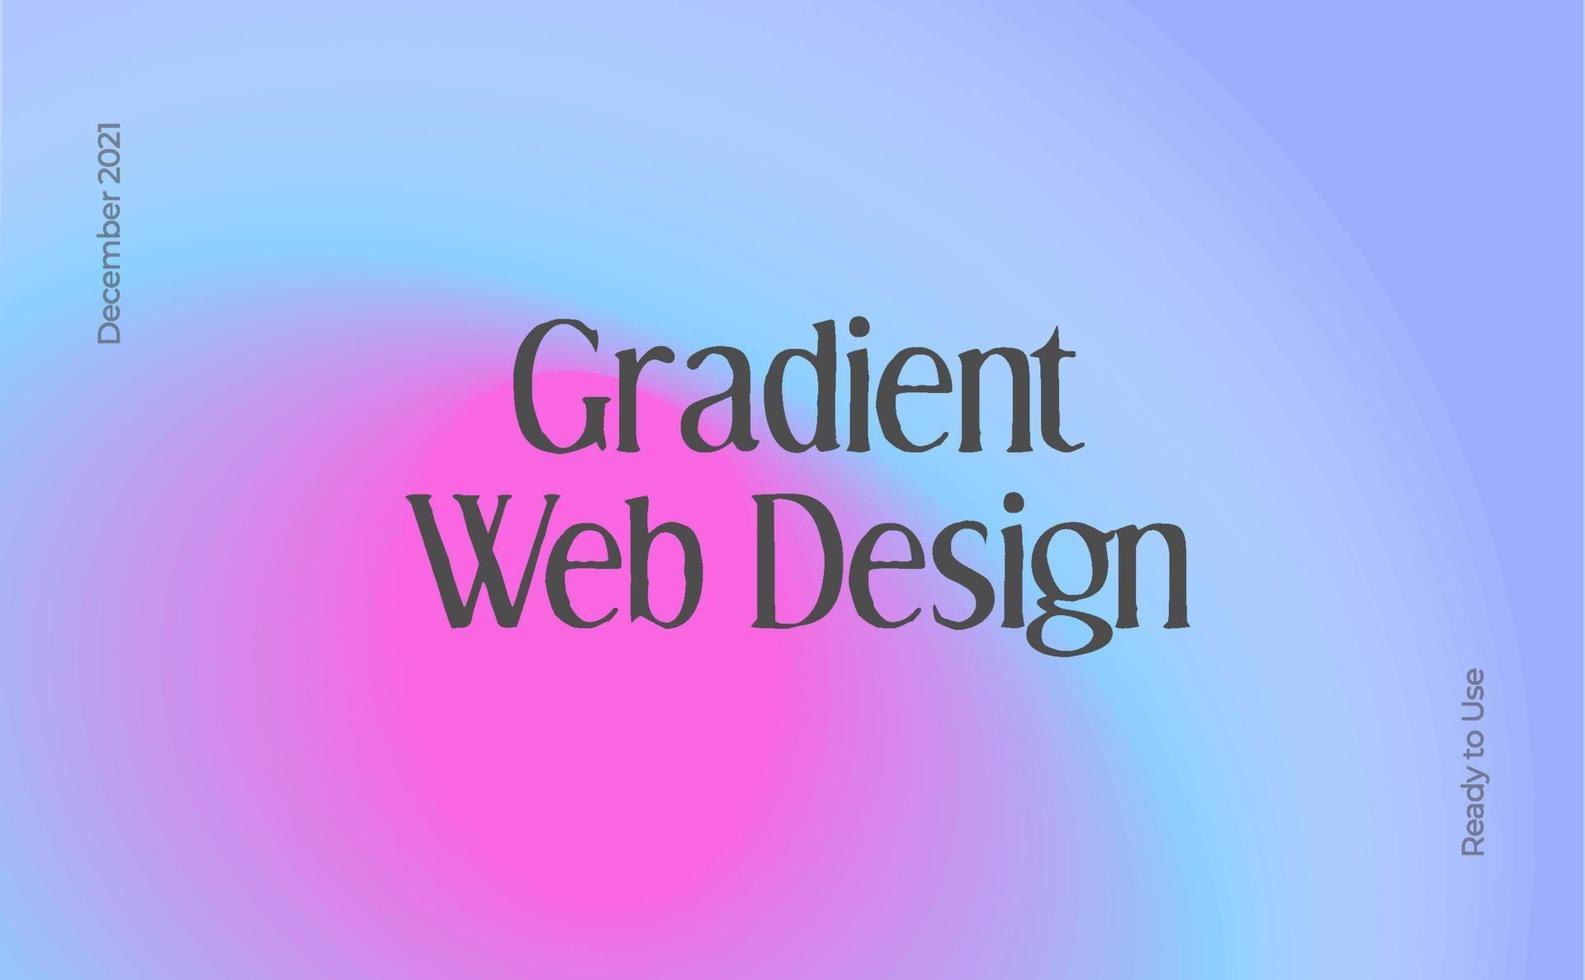 plantilla de banner web degradados retro colorido abstracto borroso vector